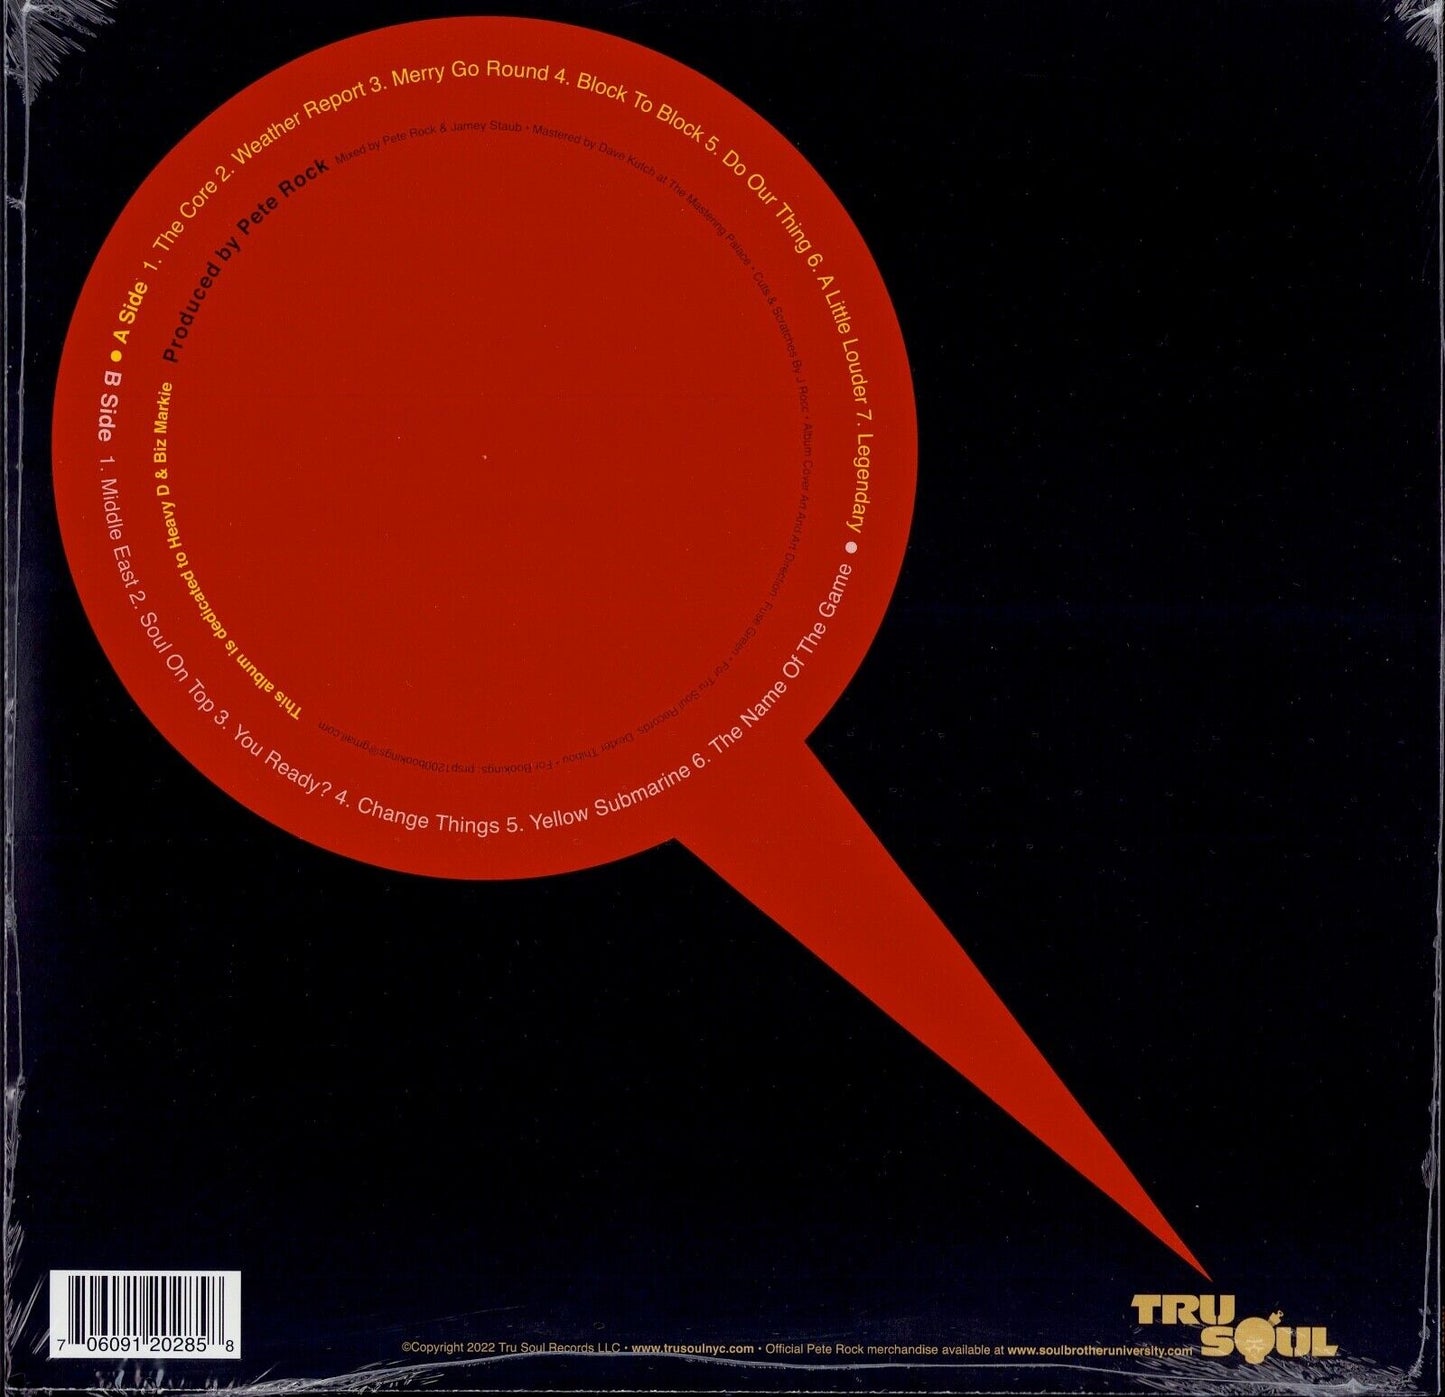 Pete Rock ‎- Return Of The SP1200 Vol. 2 Red Opaque Vinyl LP RSD Edition